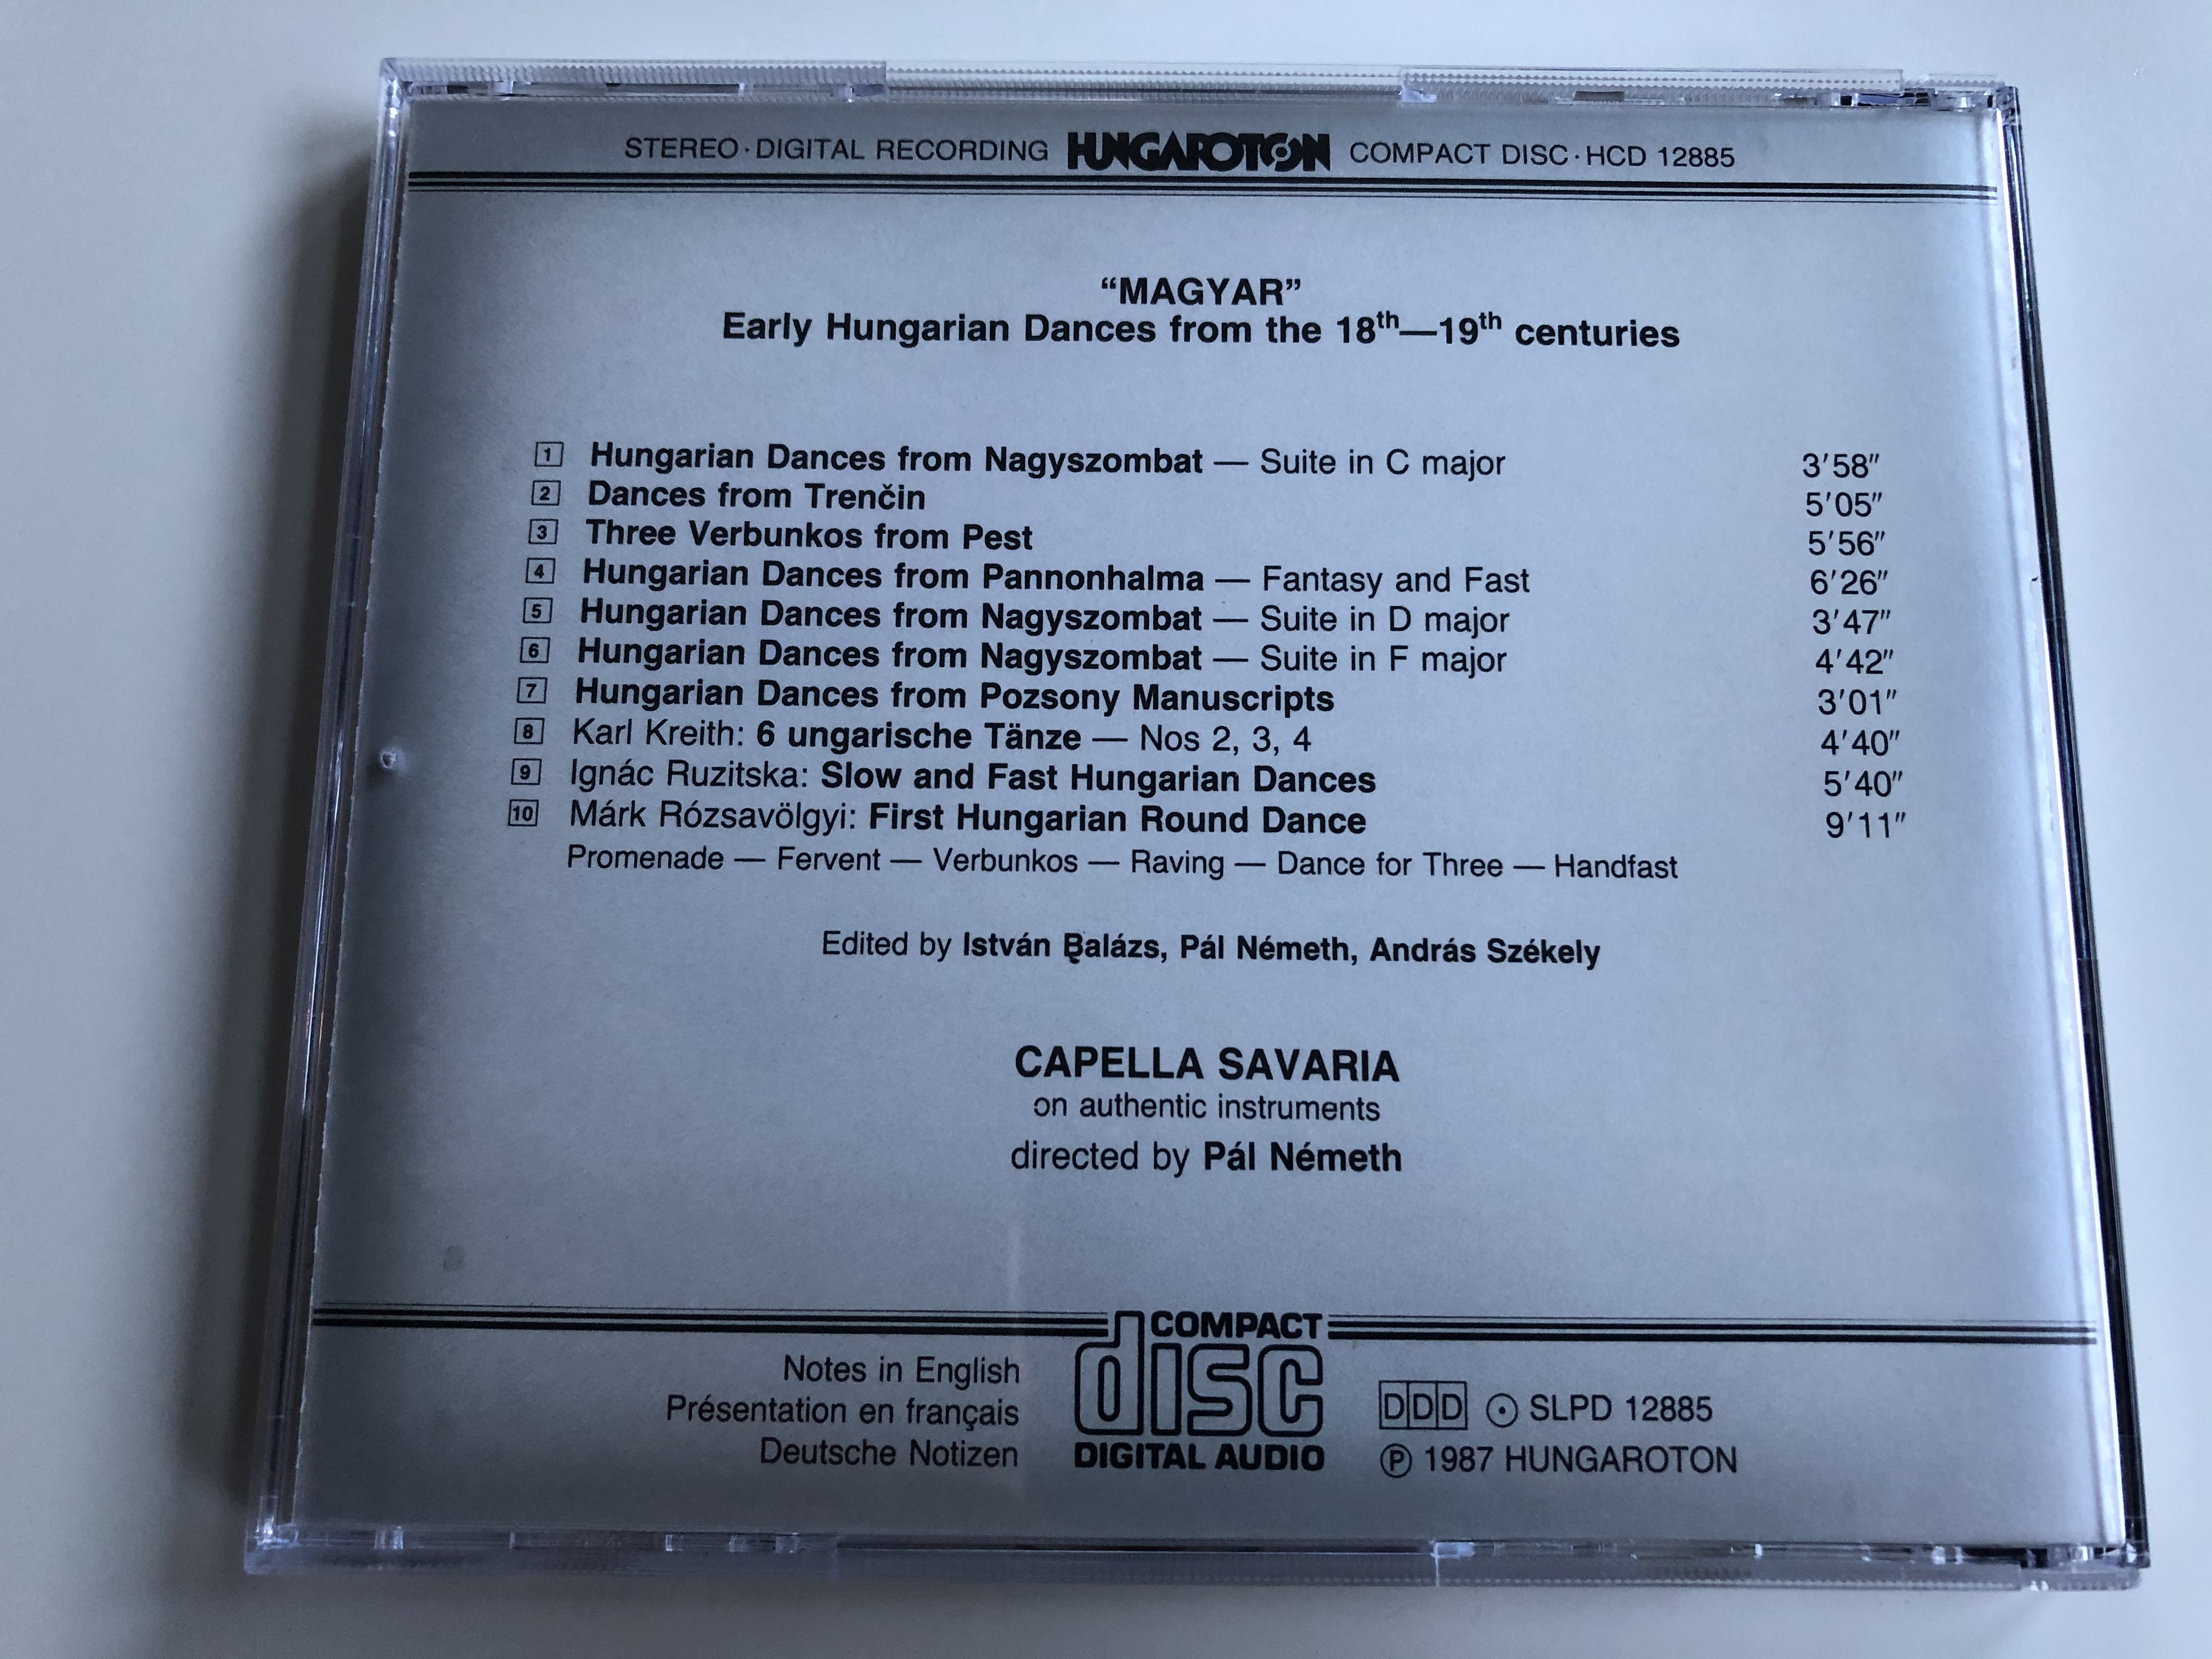 early-hungarian-dances-from-the-18th-19th-centuries-capella-savaria-p-l-n-meth-magyar-nota-hungaroton-audio-cd-1987-stereo-hcd-12885-7-.jpg